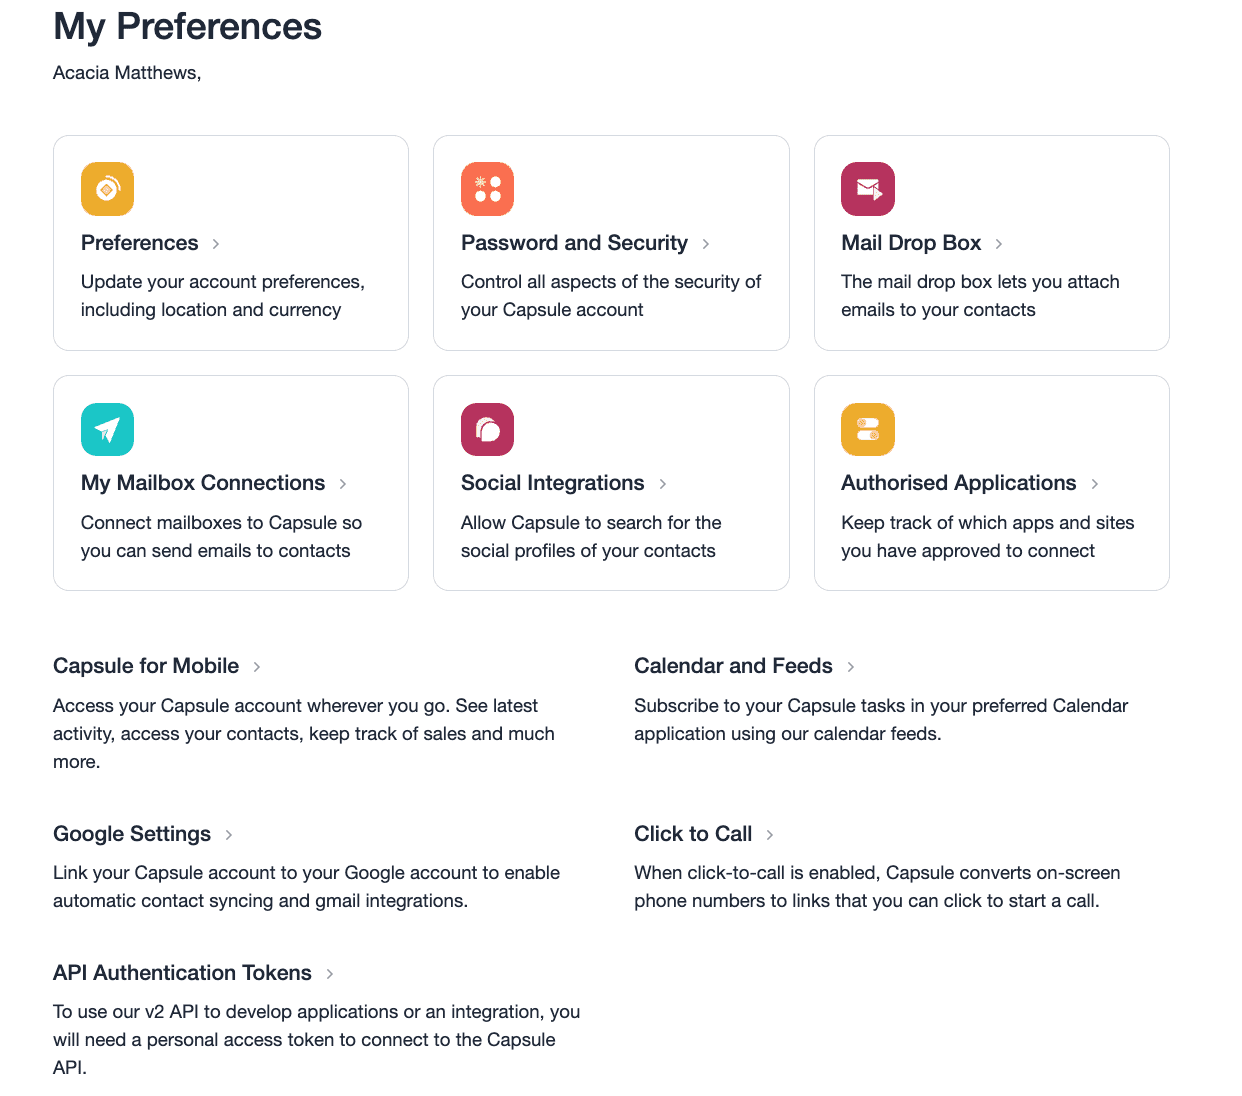 user preferences menu